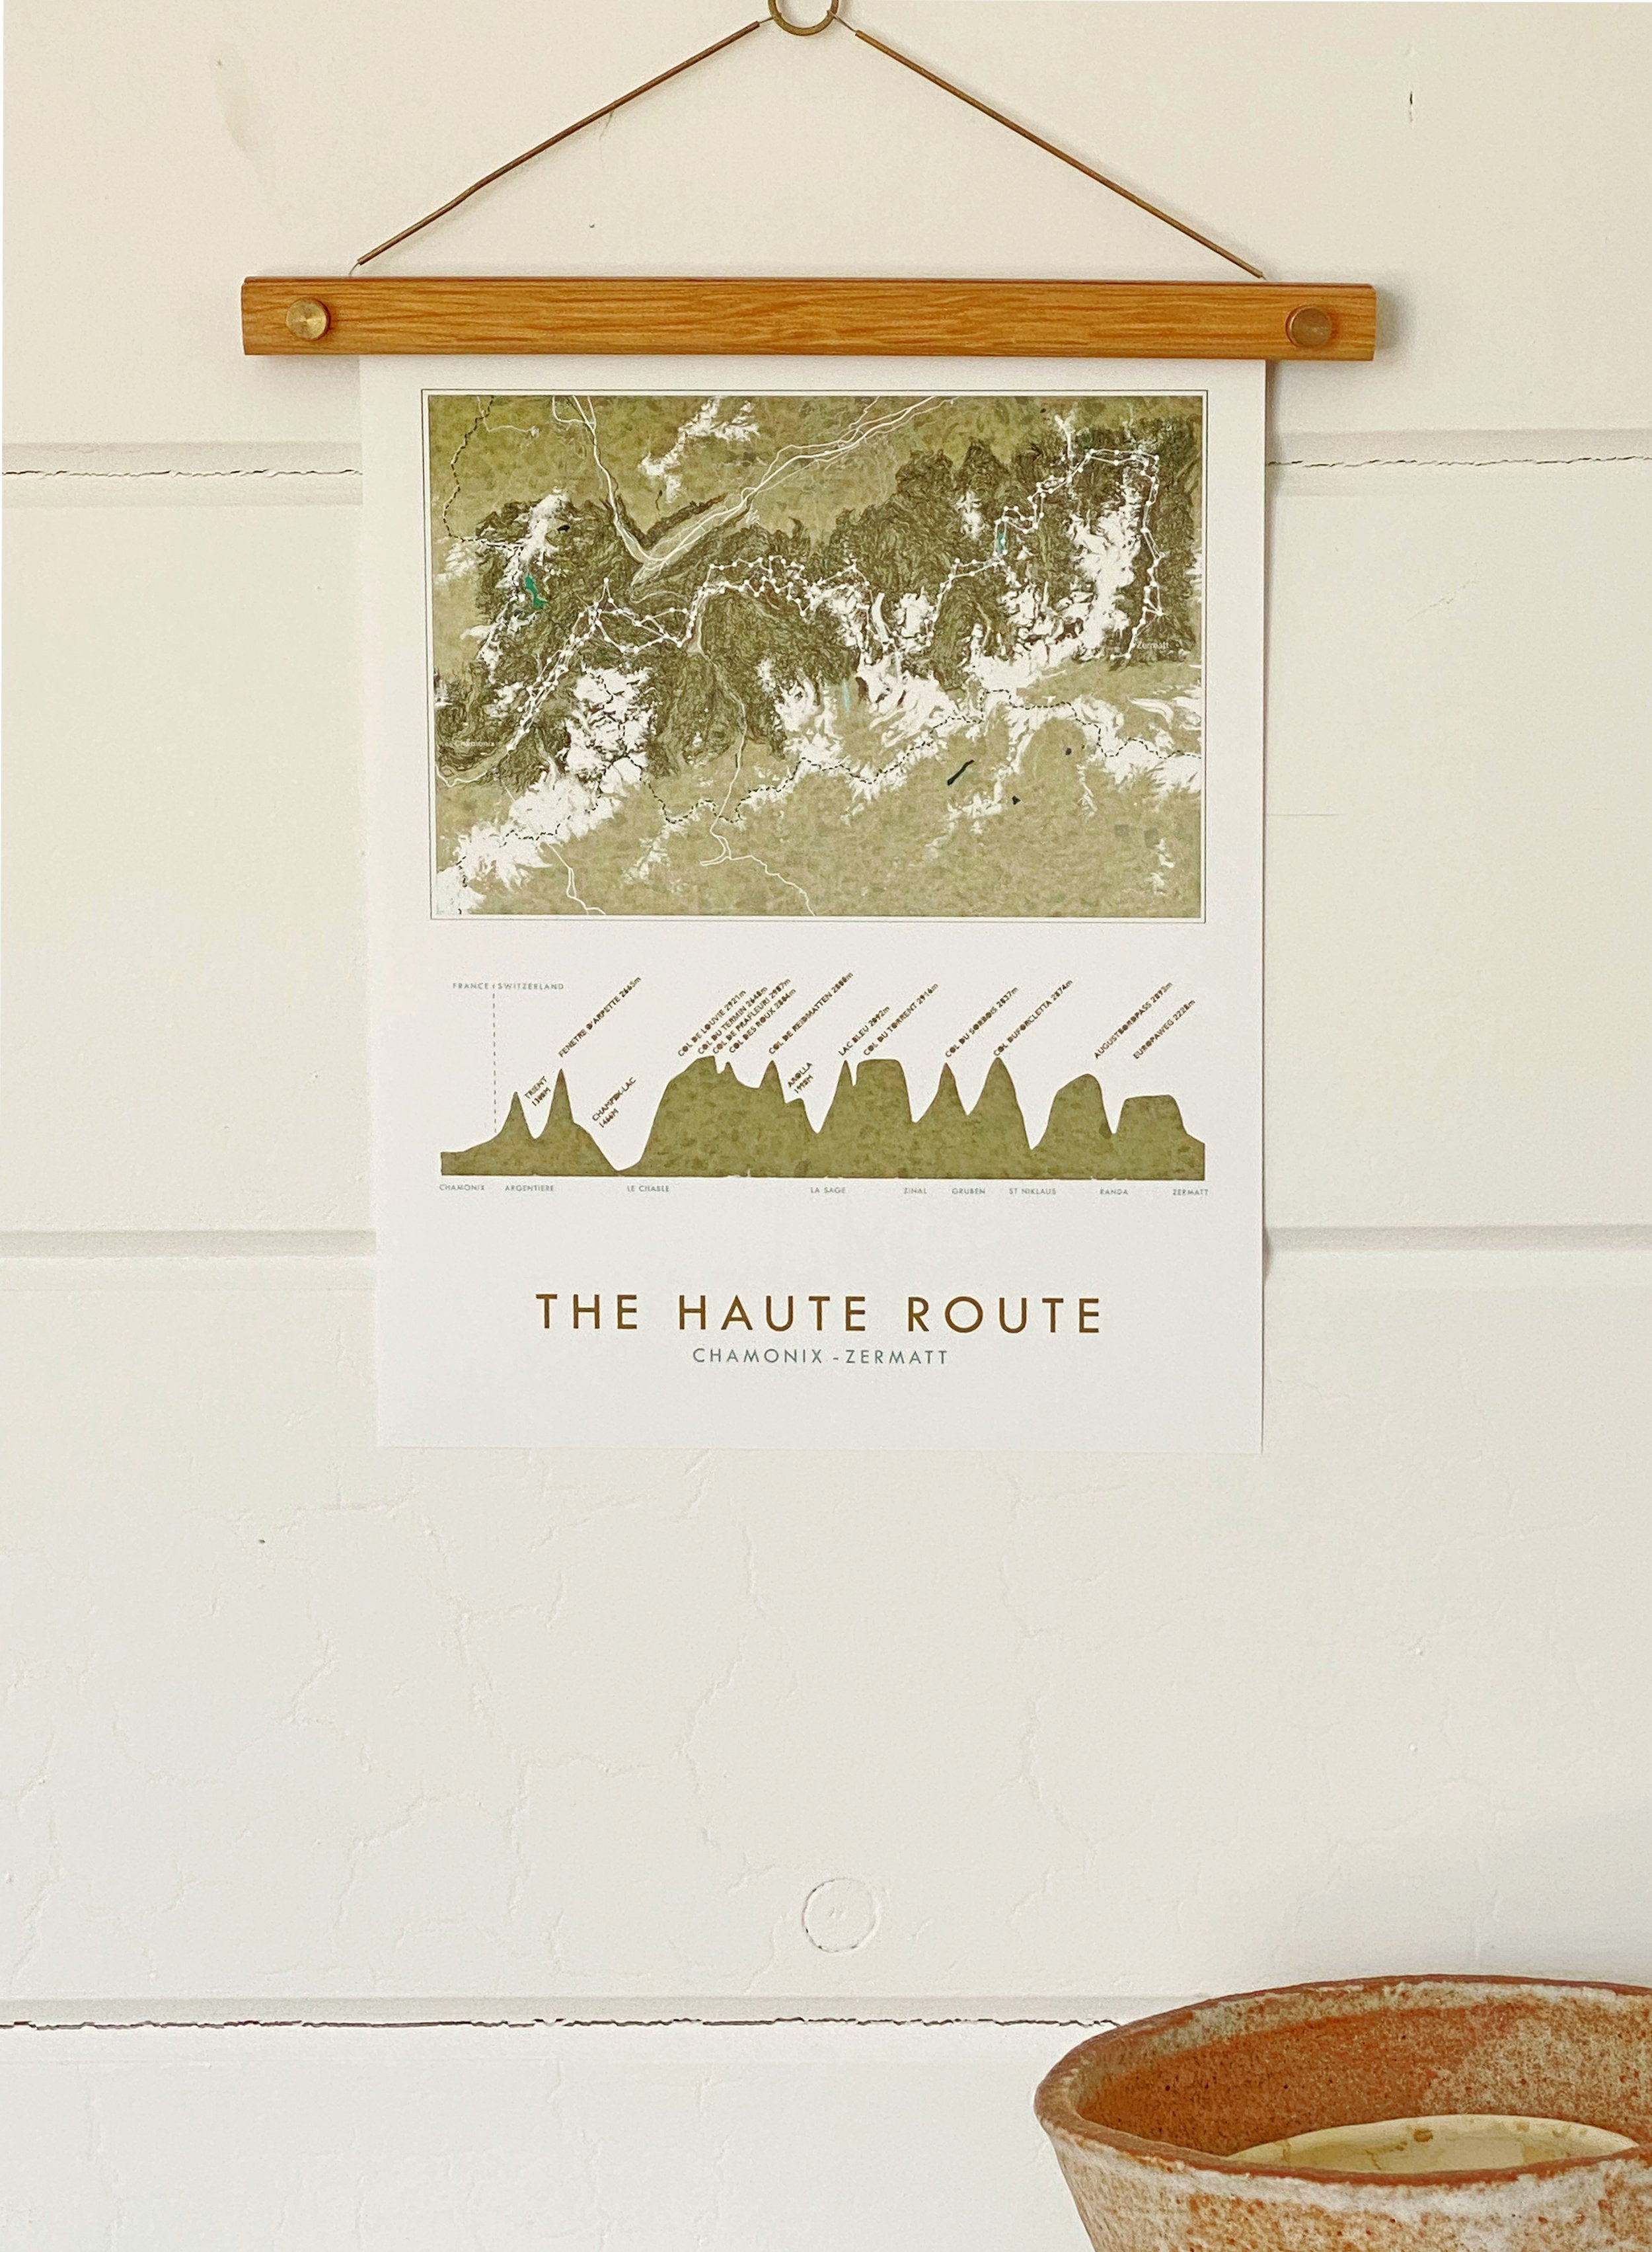 THE HAUTE ROUTE, Chamonix France to Zermatt Switzerland Map Drawing: PRINT